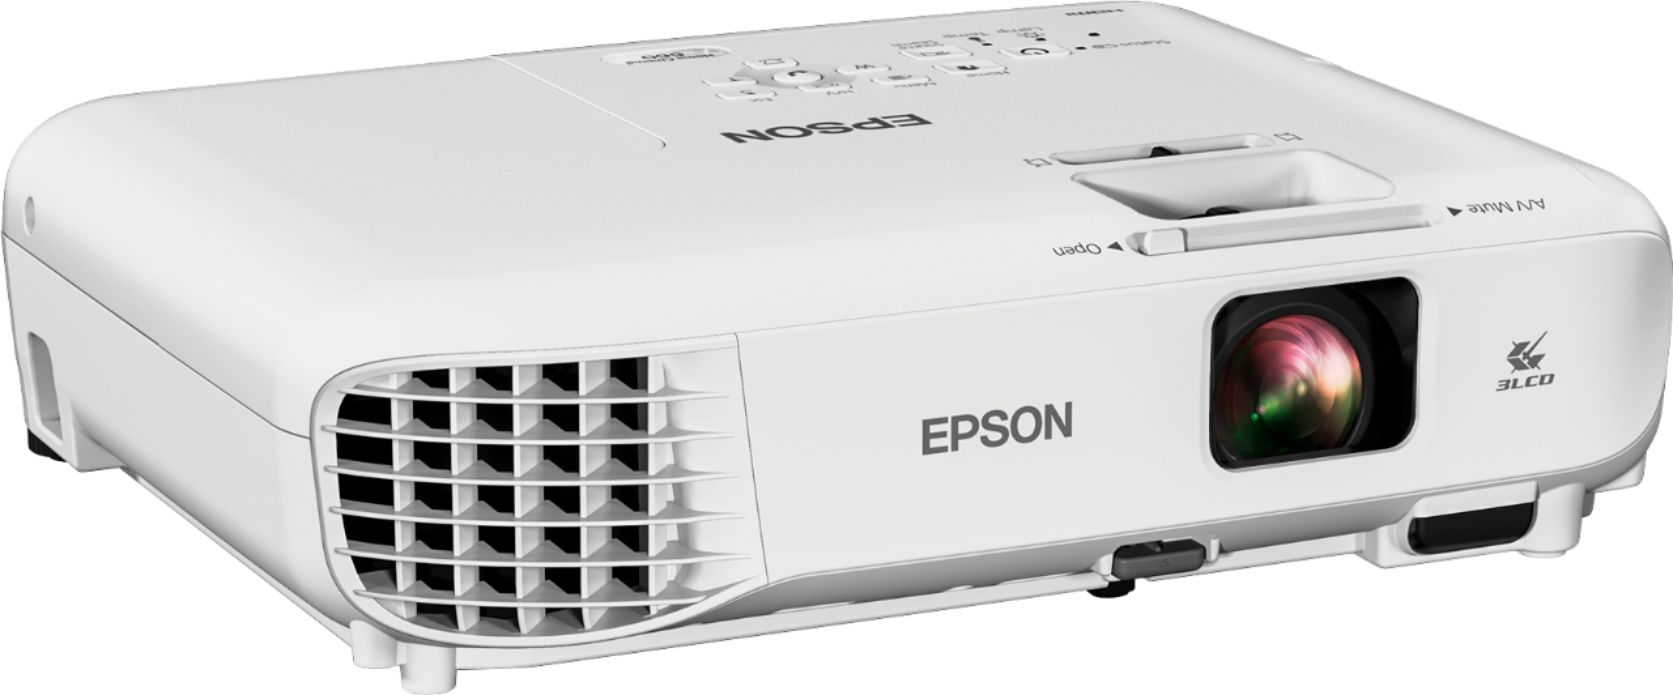 Customer Reviews: Epson Home Cinema 660 SVGA 3LCD Projector White EPSON